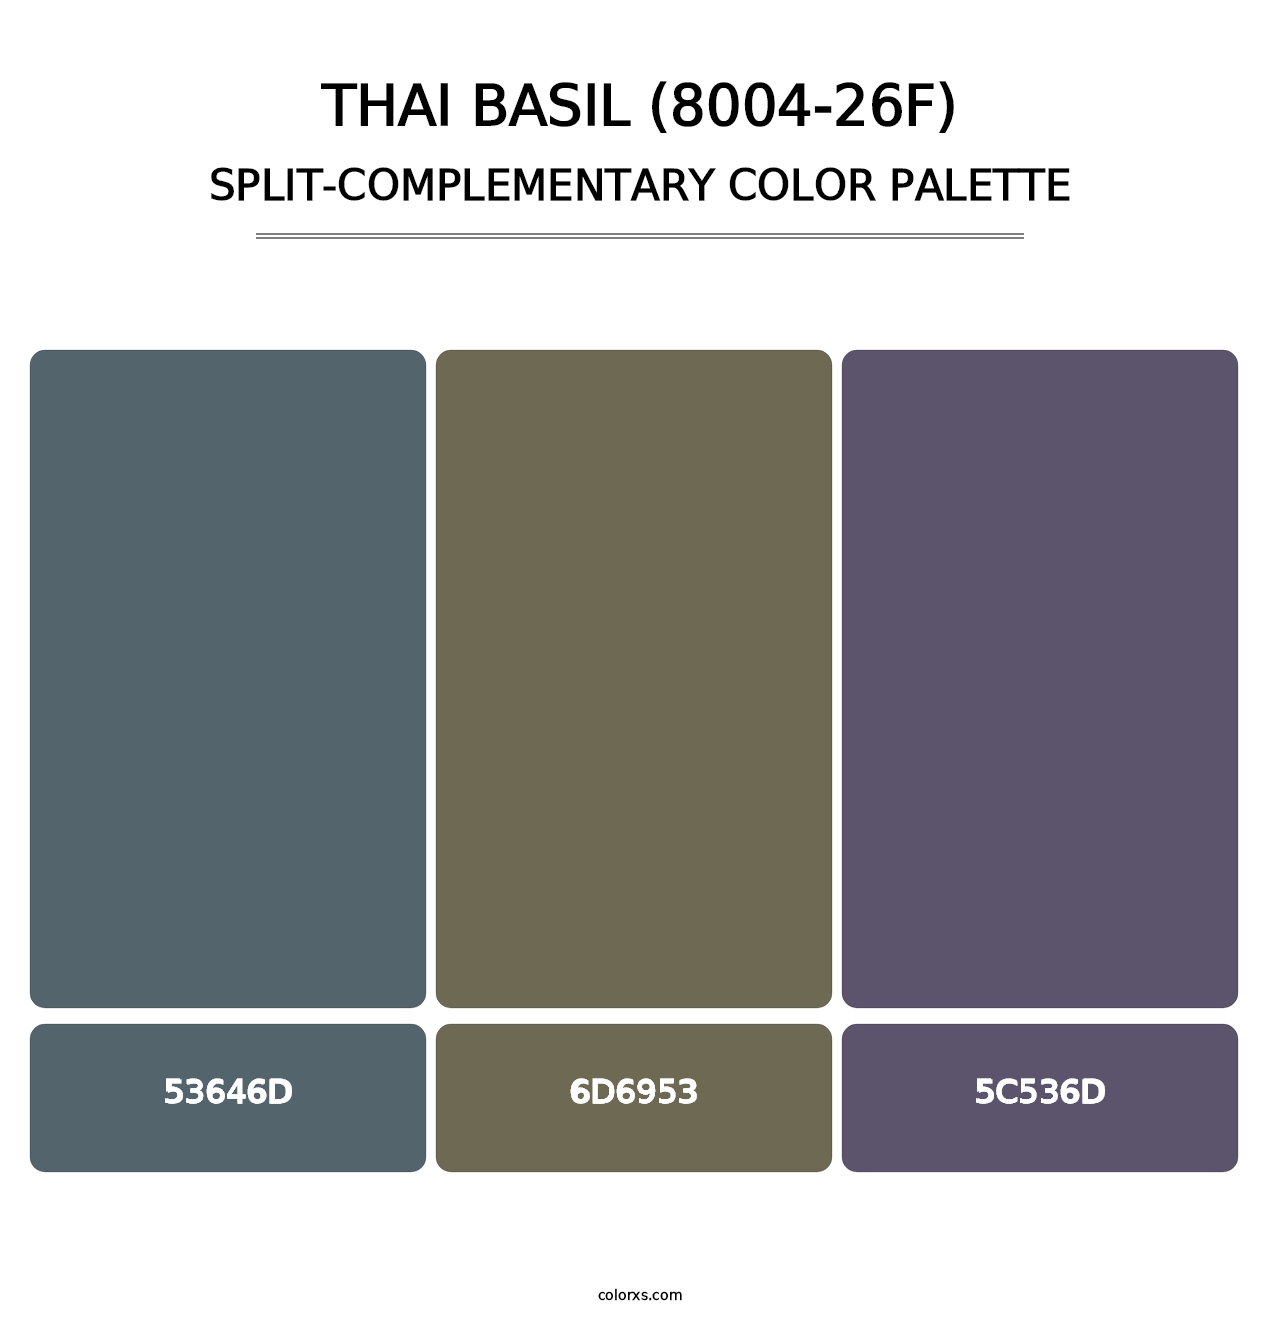 Thai Basil (8004-26F) - Split-Complementary Color Palette